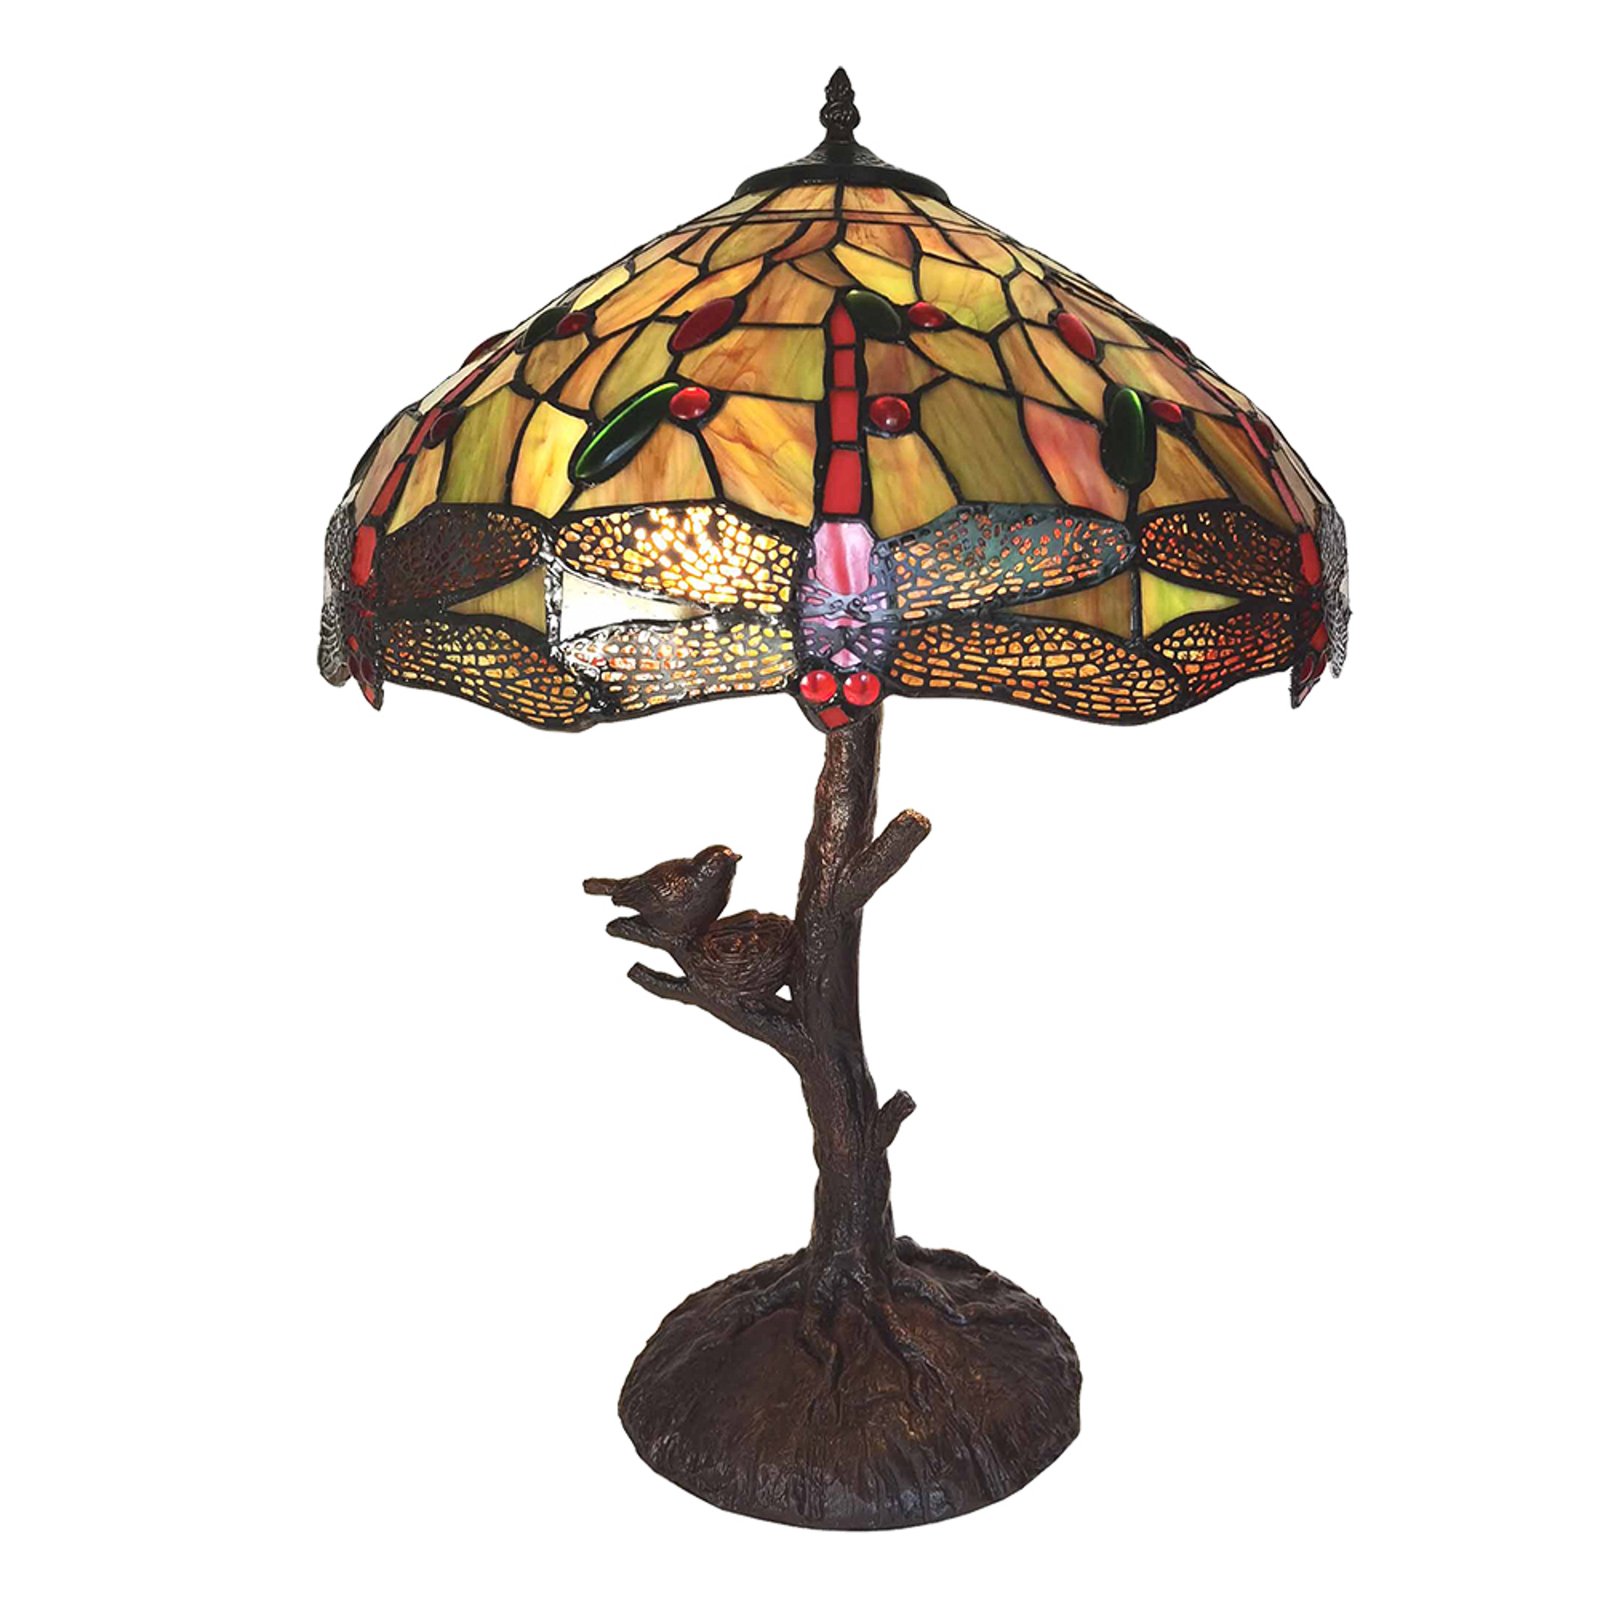 5LL-6111 Tiffany-style table lamp